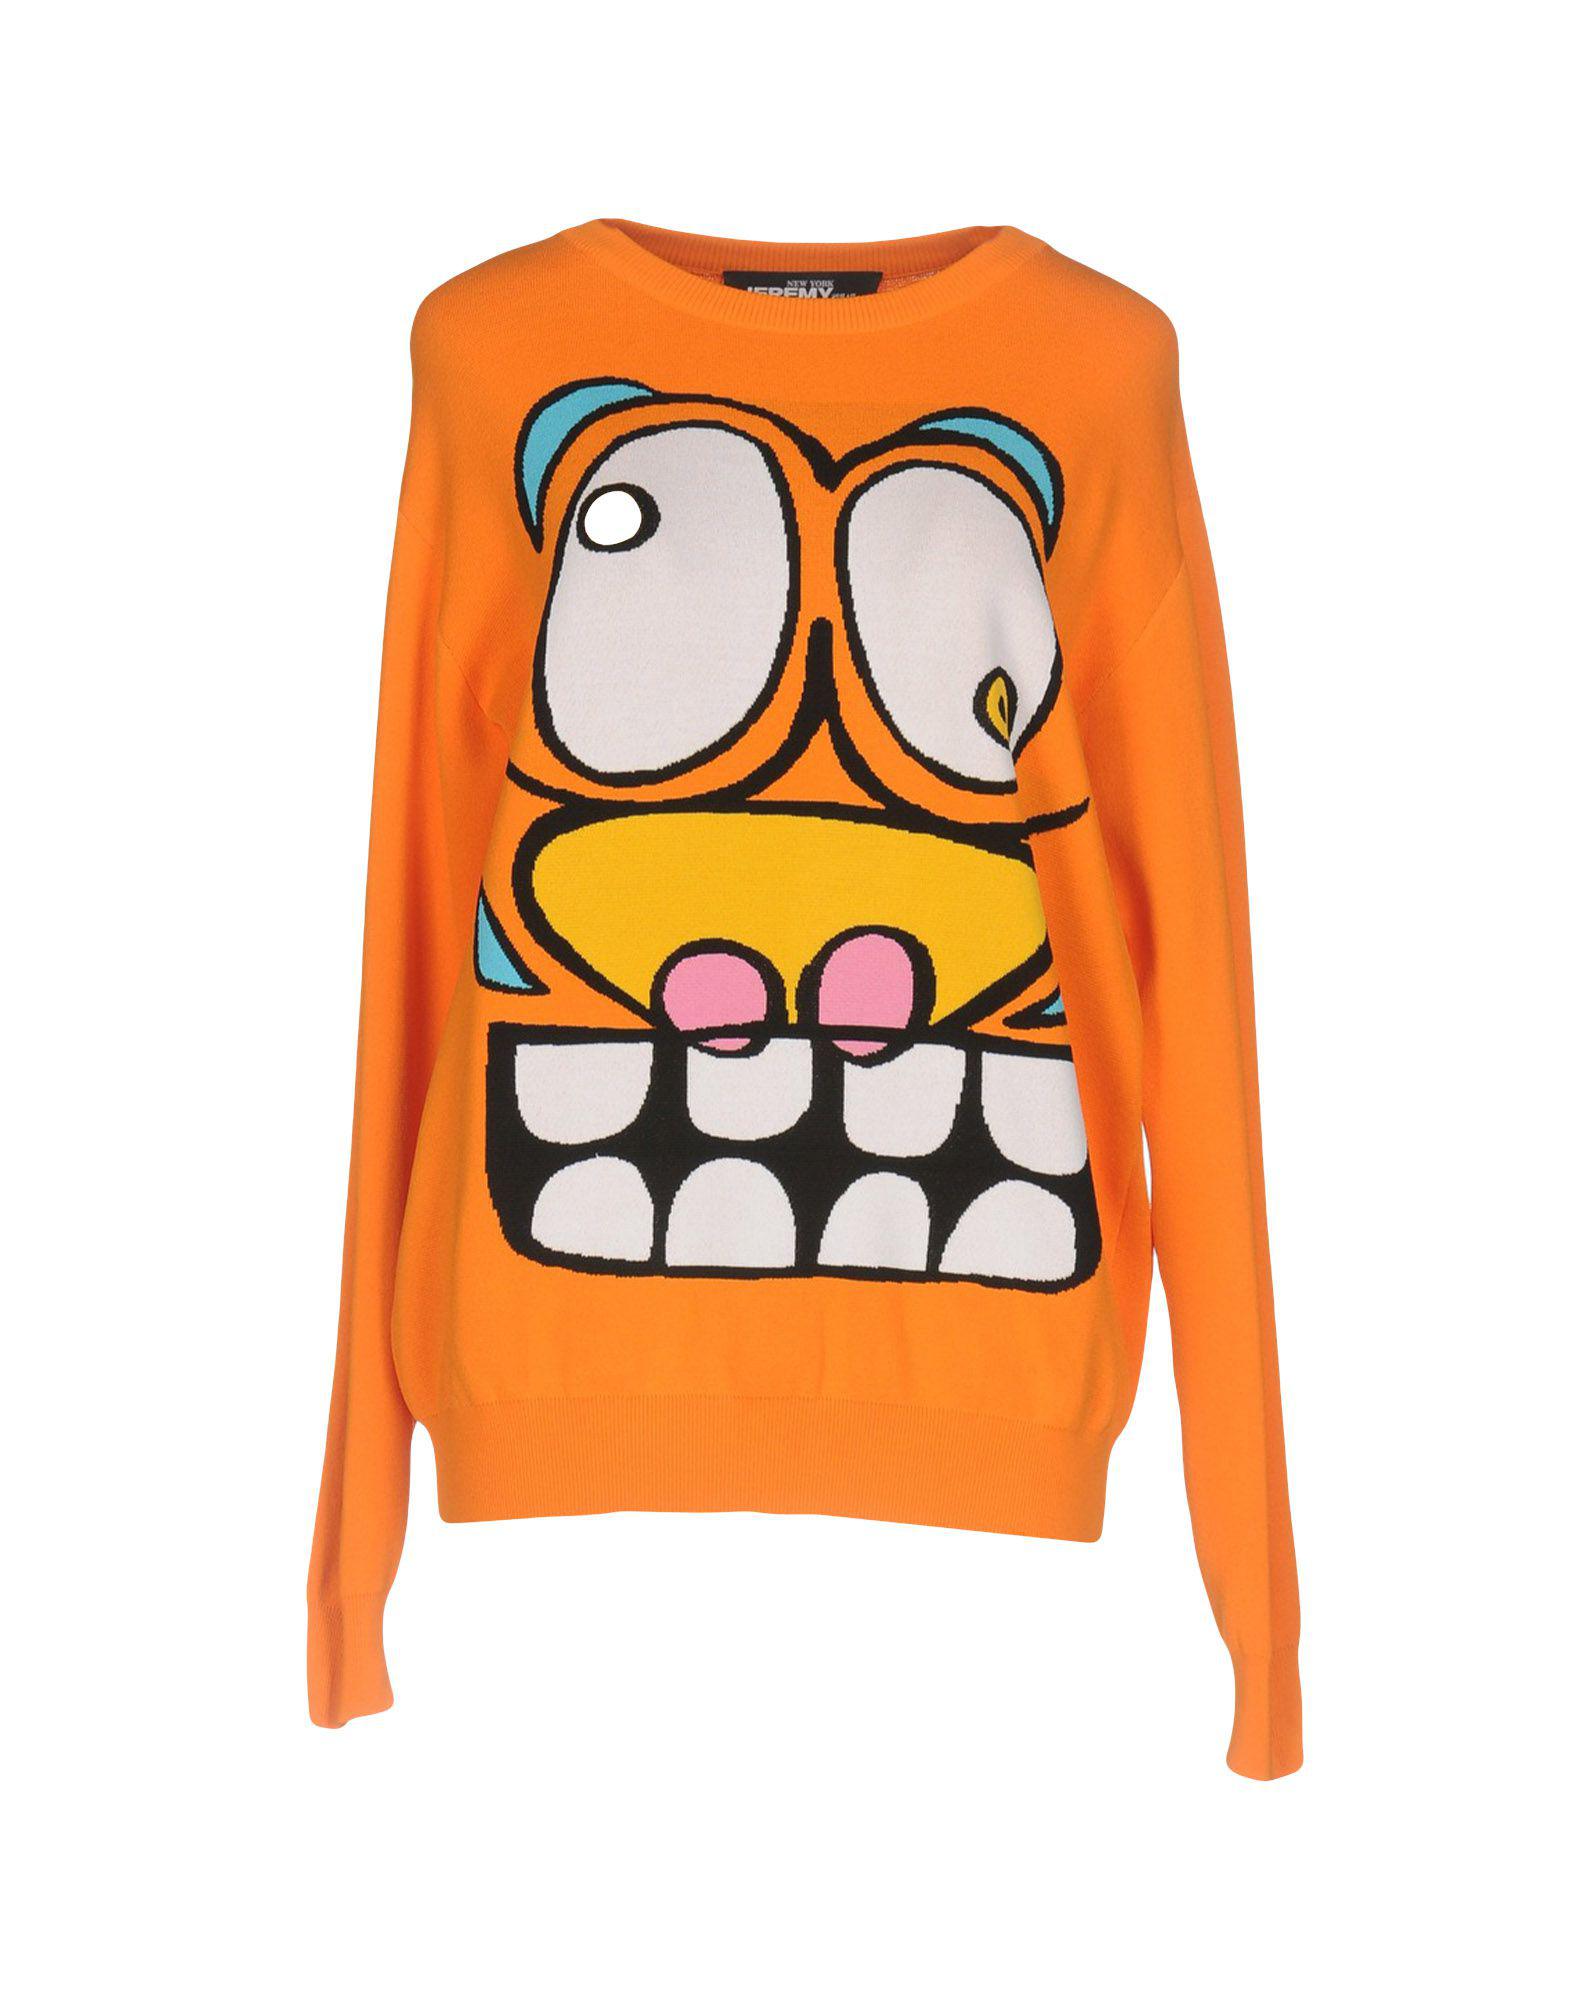 Jeremy Scott Synthetic Sweater in Orange - Save 37% - Lyst